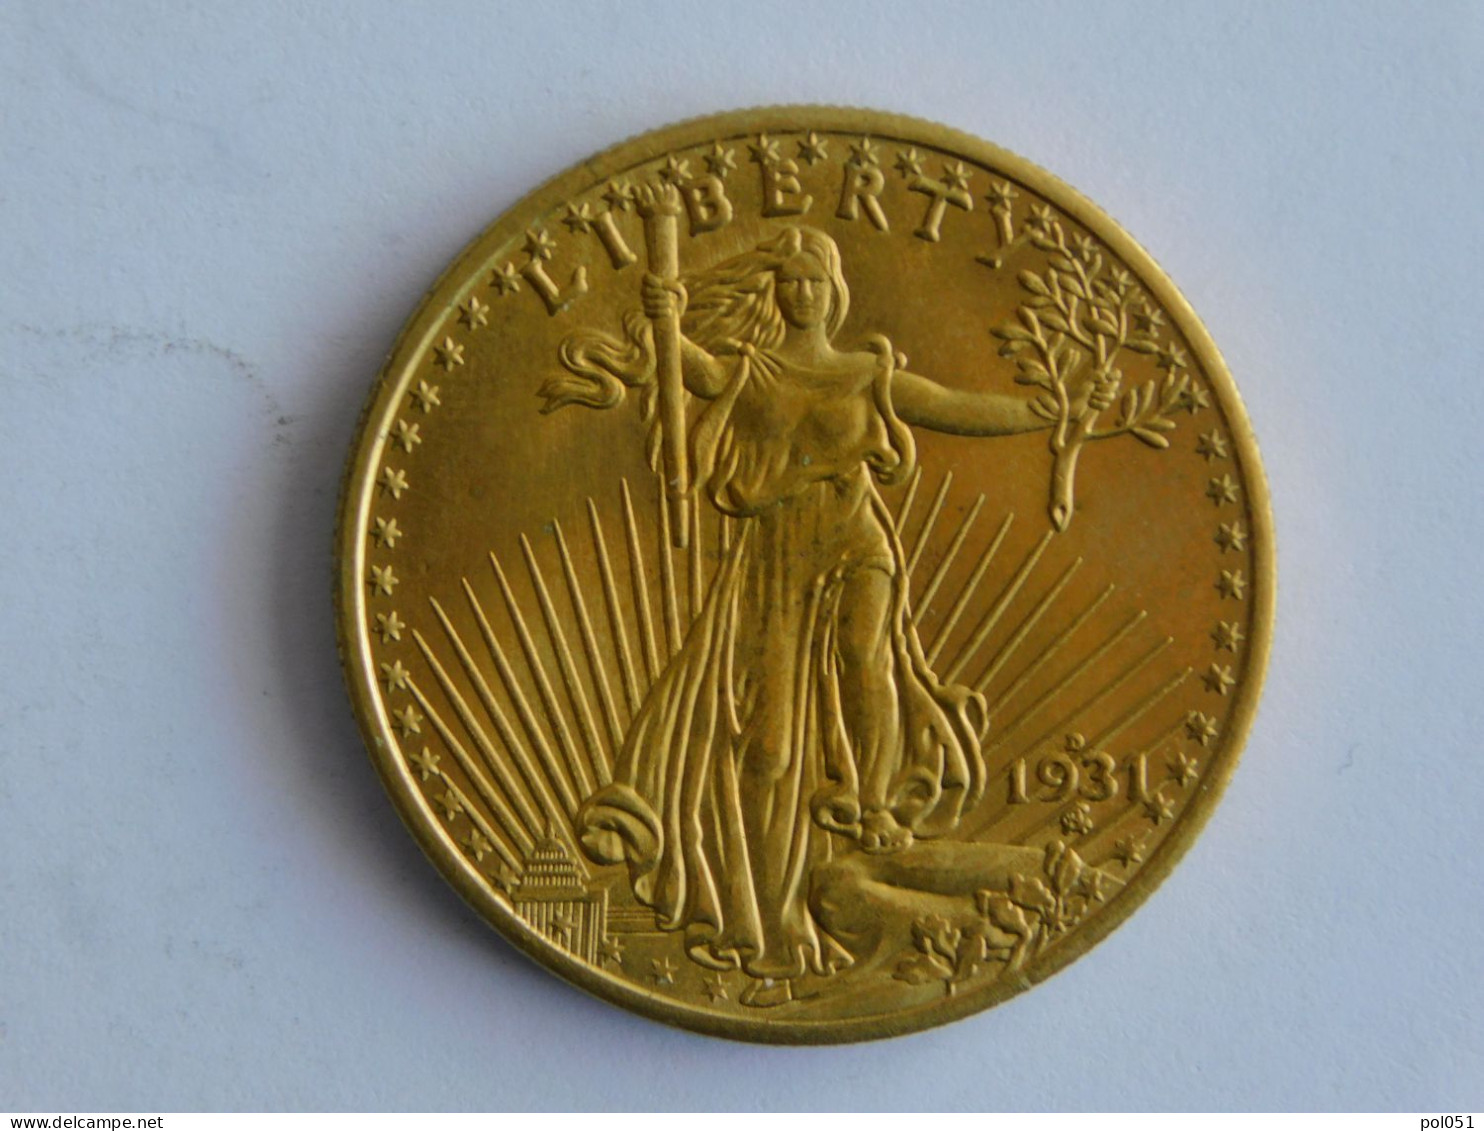 USA 20 TWENTY DOLLAR 1931 D OR GOLD Dollars Copie Copy - 20$ - Double Eagles - 1907-1933: Saint-Gaudens